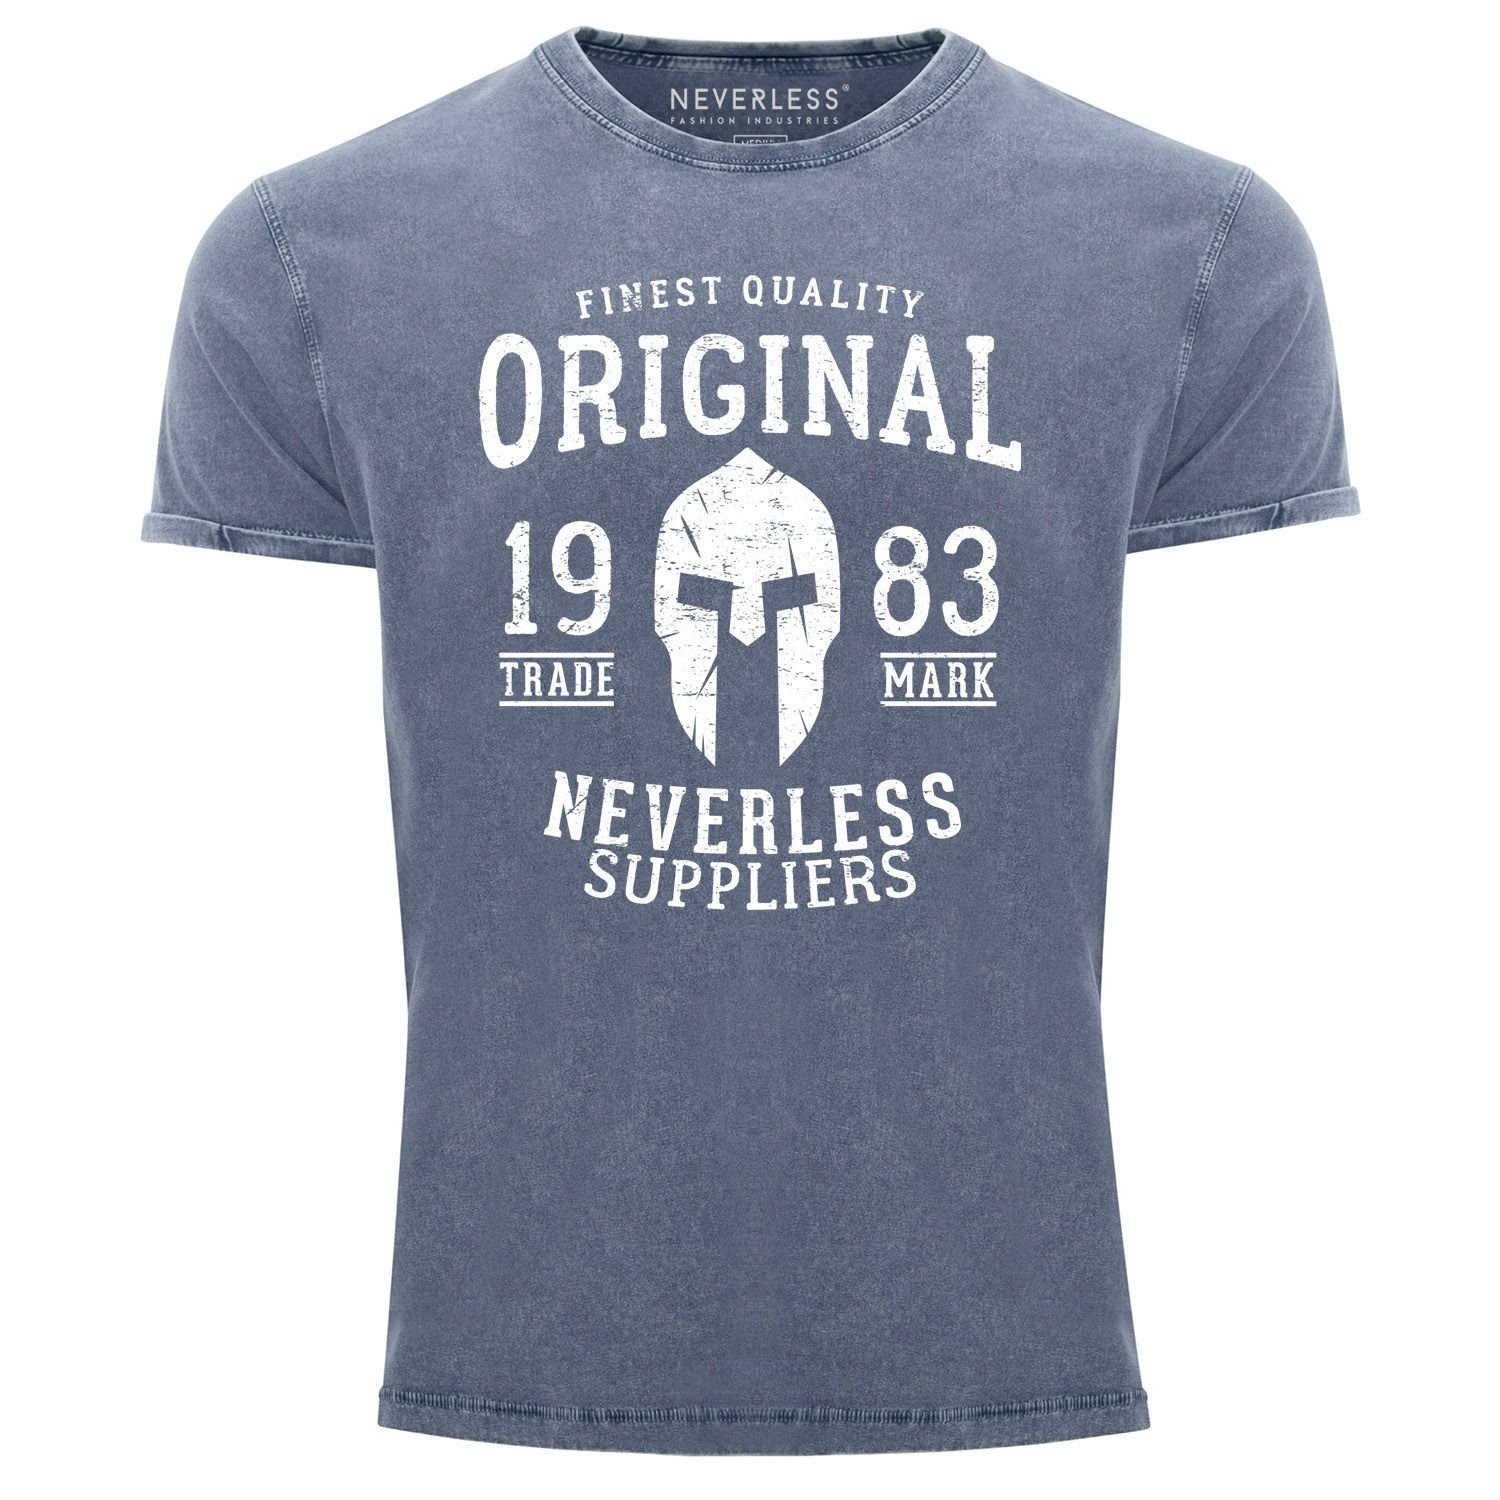 Neverless Print-Shirt Cooles Angesagtes Herren T-Shirt Vintage Shirt Original Gladiator Aufdruck Used Look Slim Fit Neverless® mit Print blau